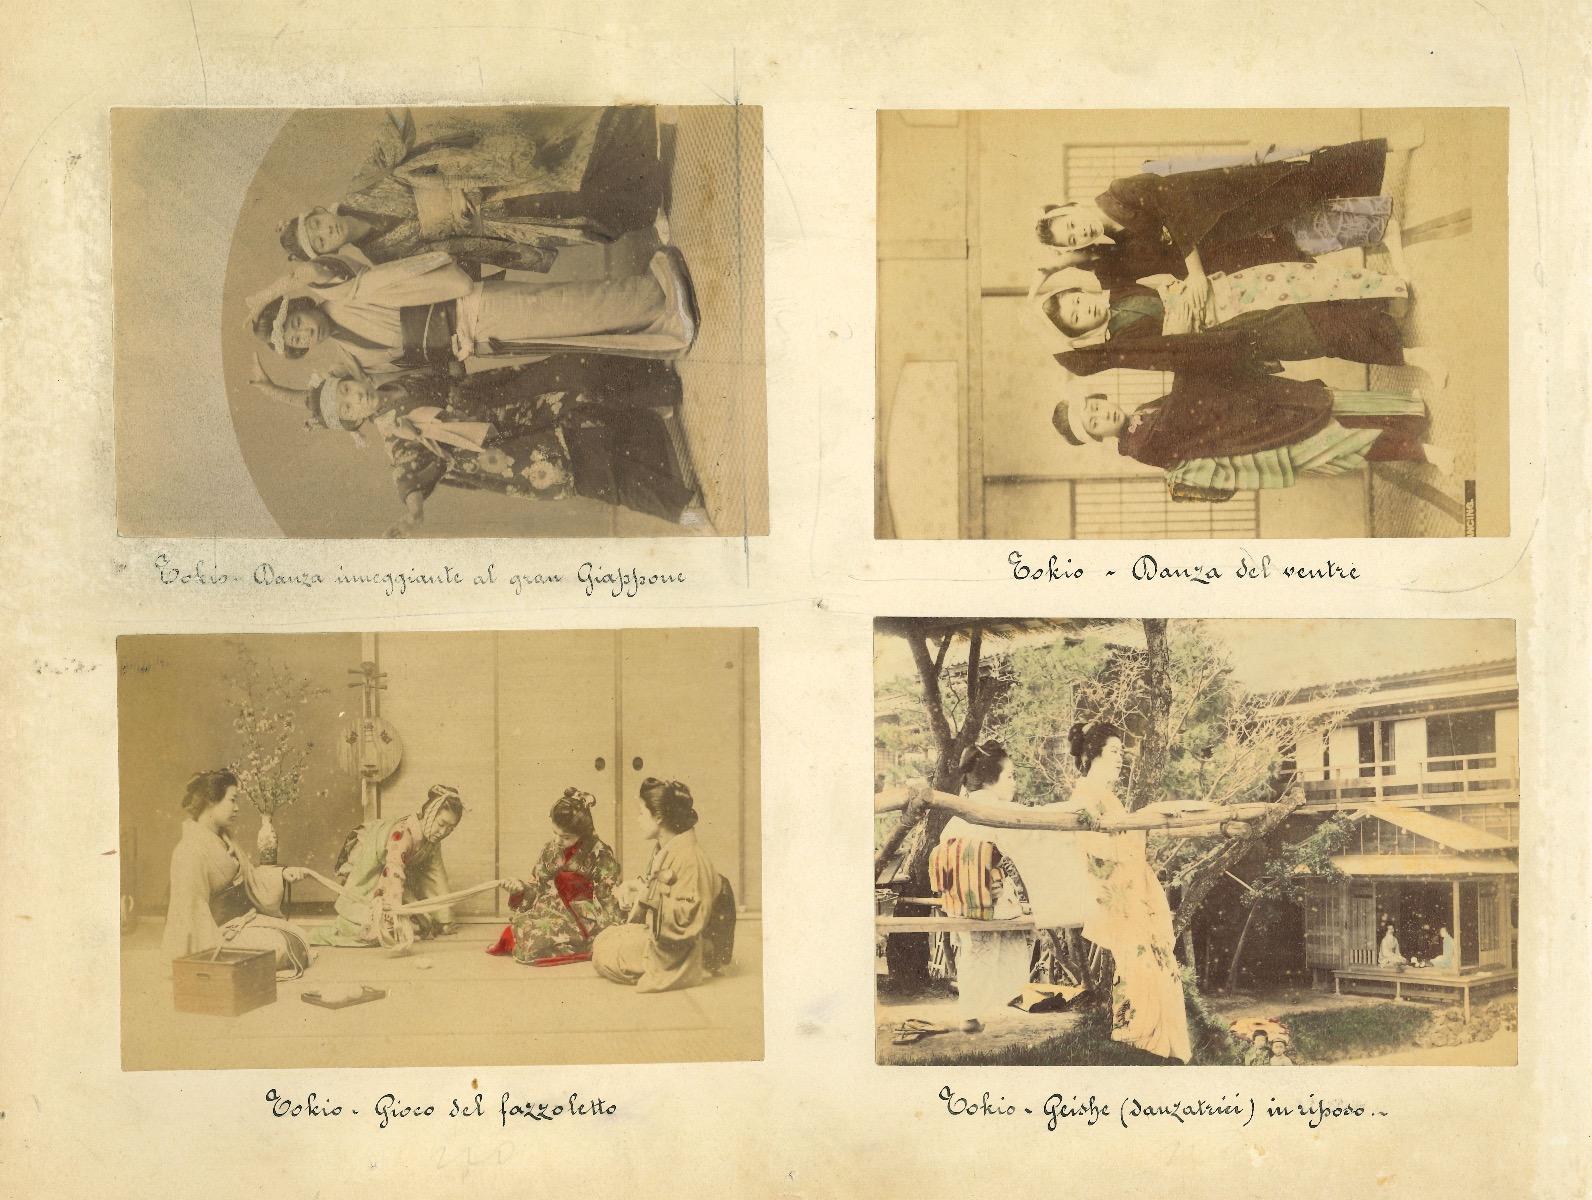 Ancient Japanese Ethnographic Photographs, Tokyo - Albumen Prints - 1880s/90s